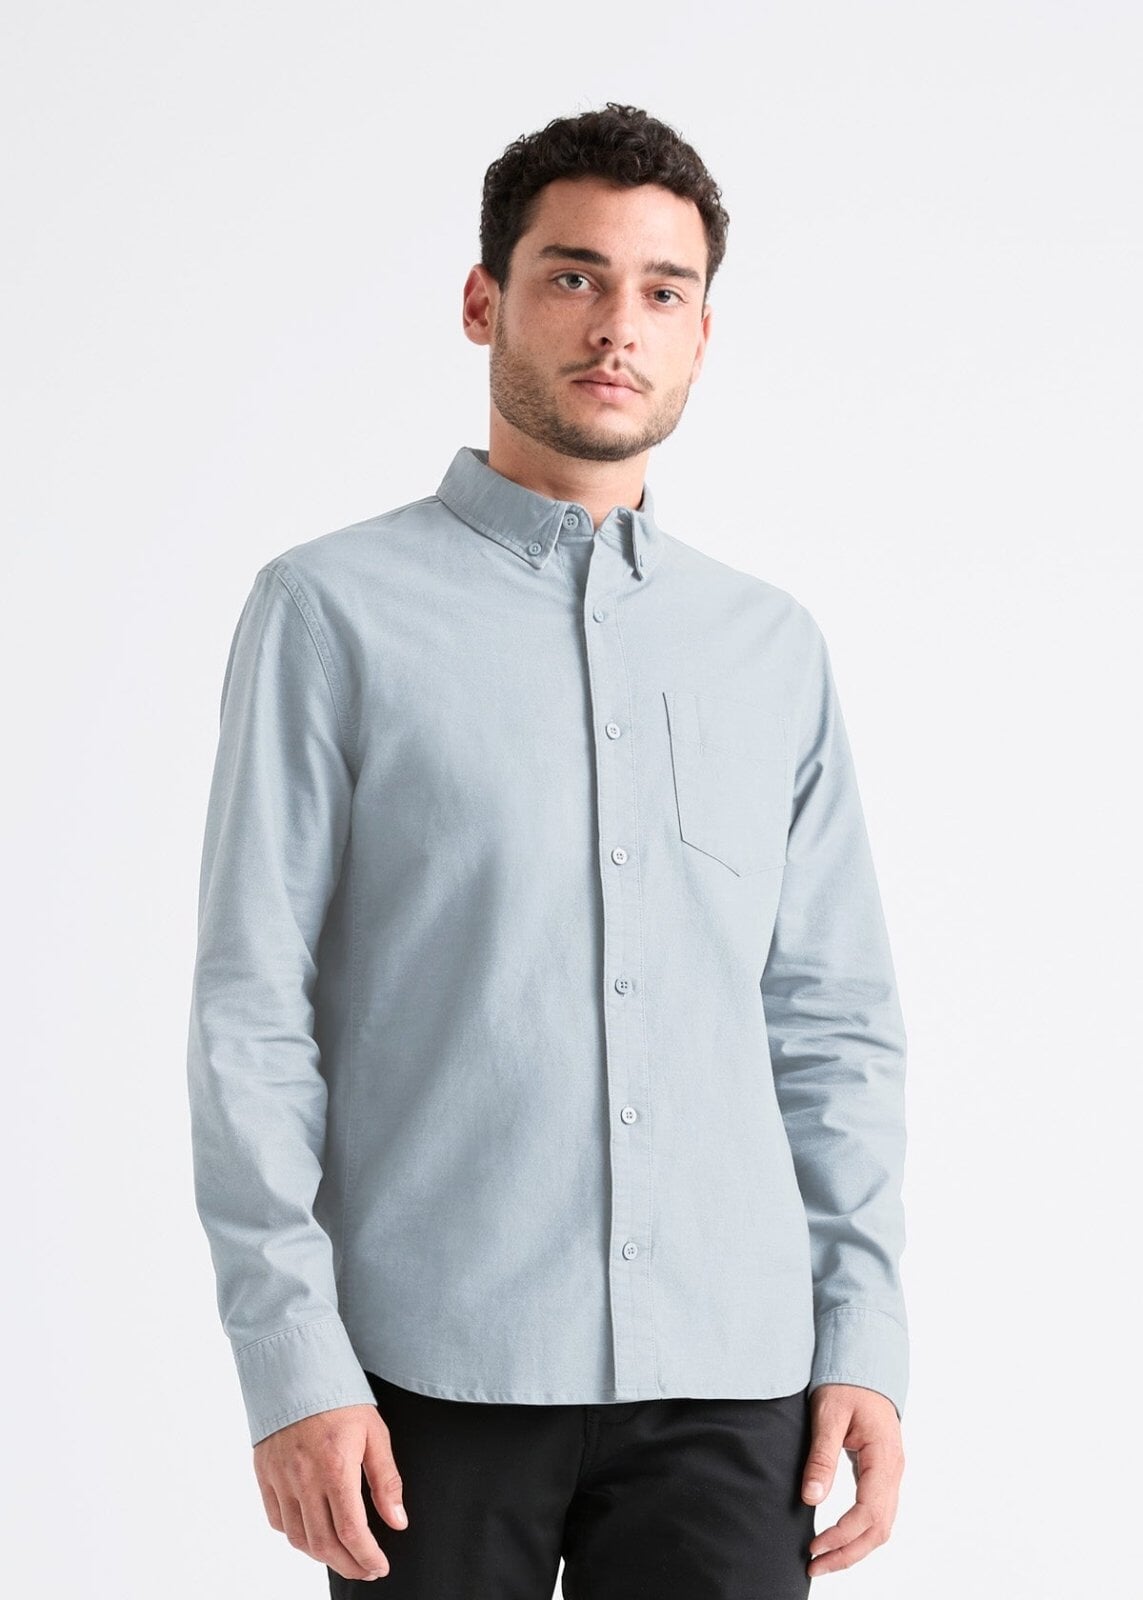 mens light blue stretch button down shirt front